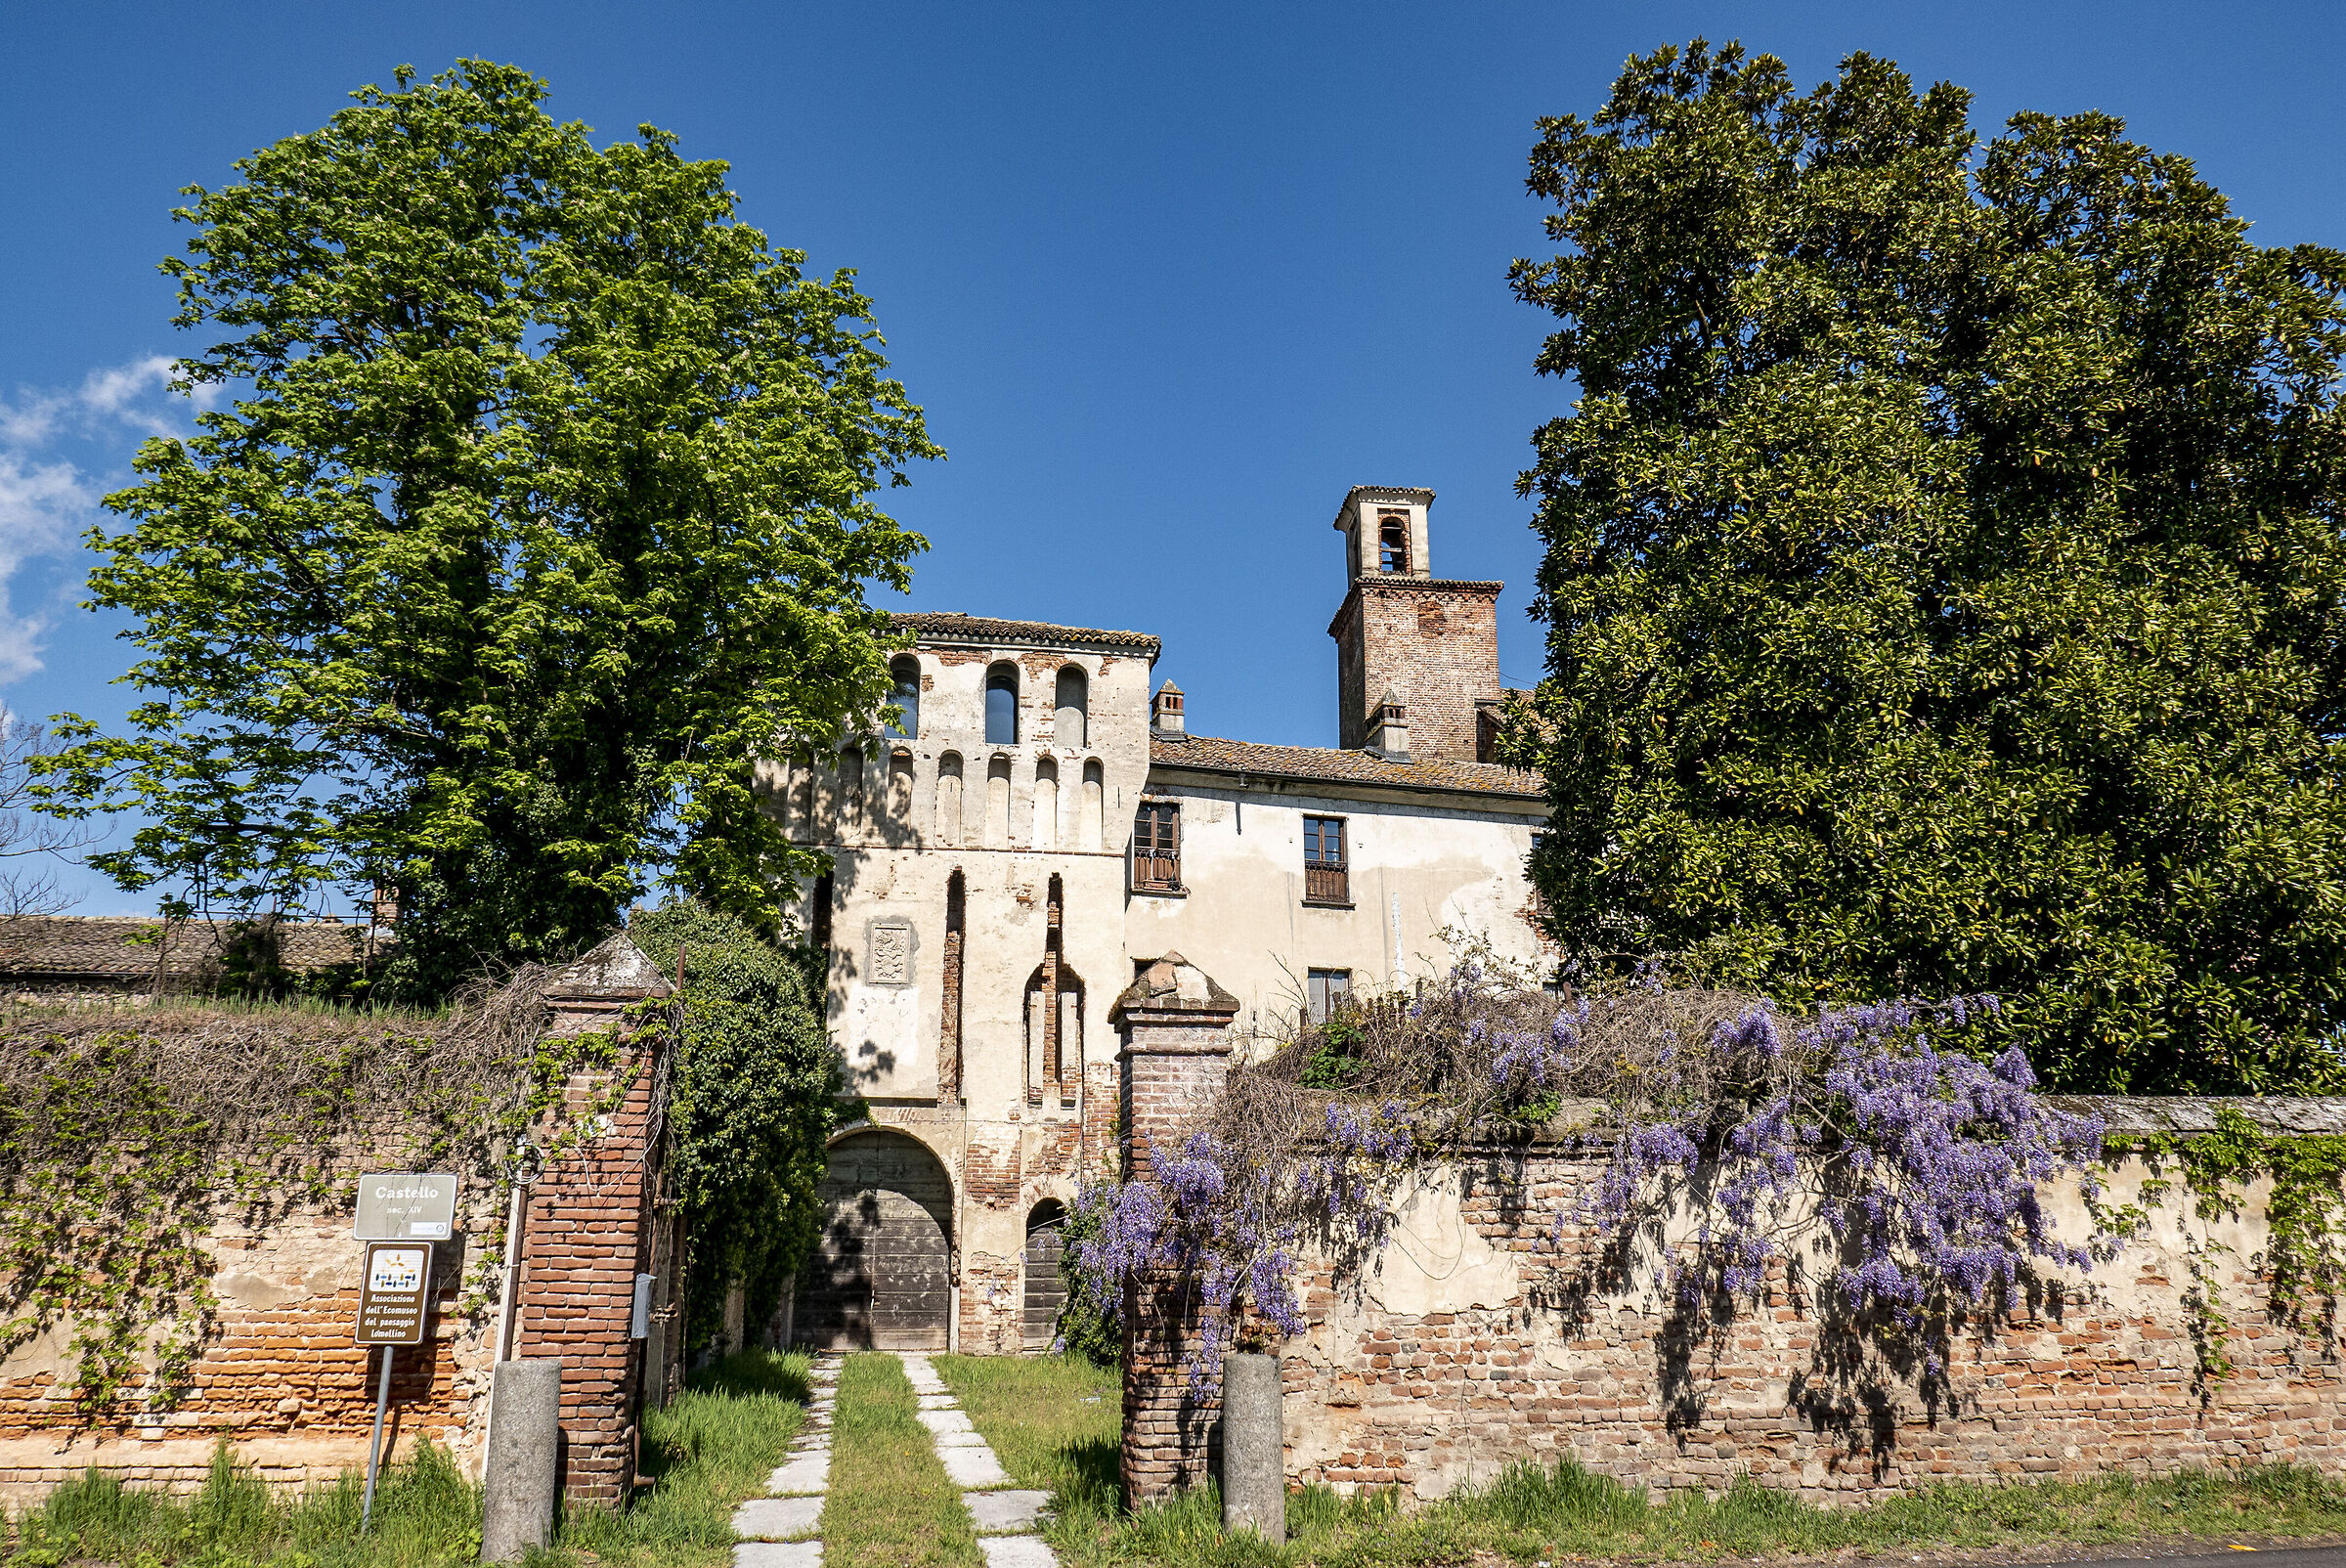 Entrance to the Castle of Valeggio...